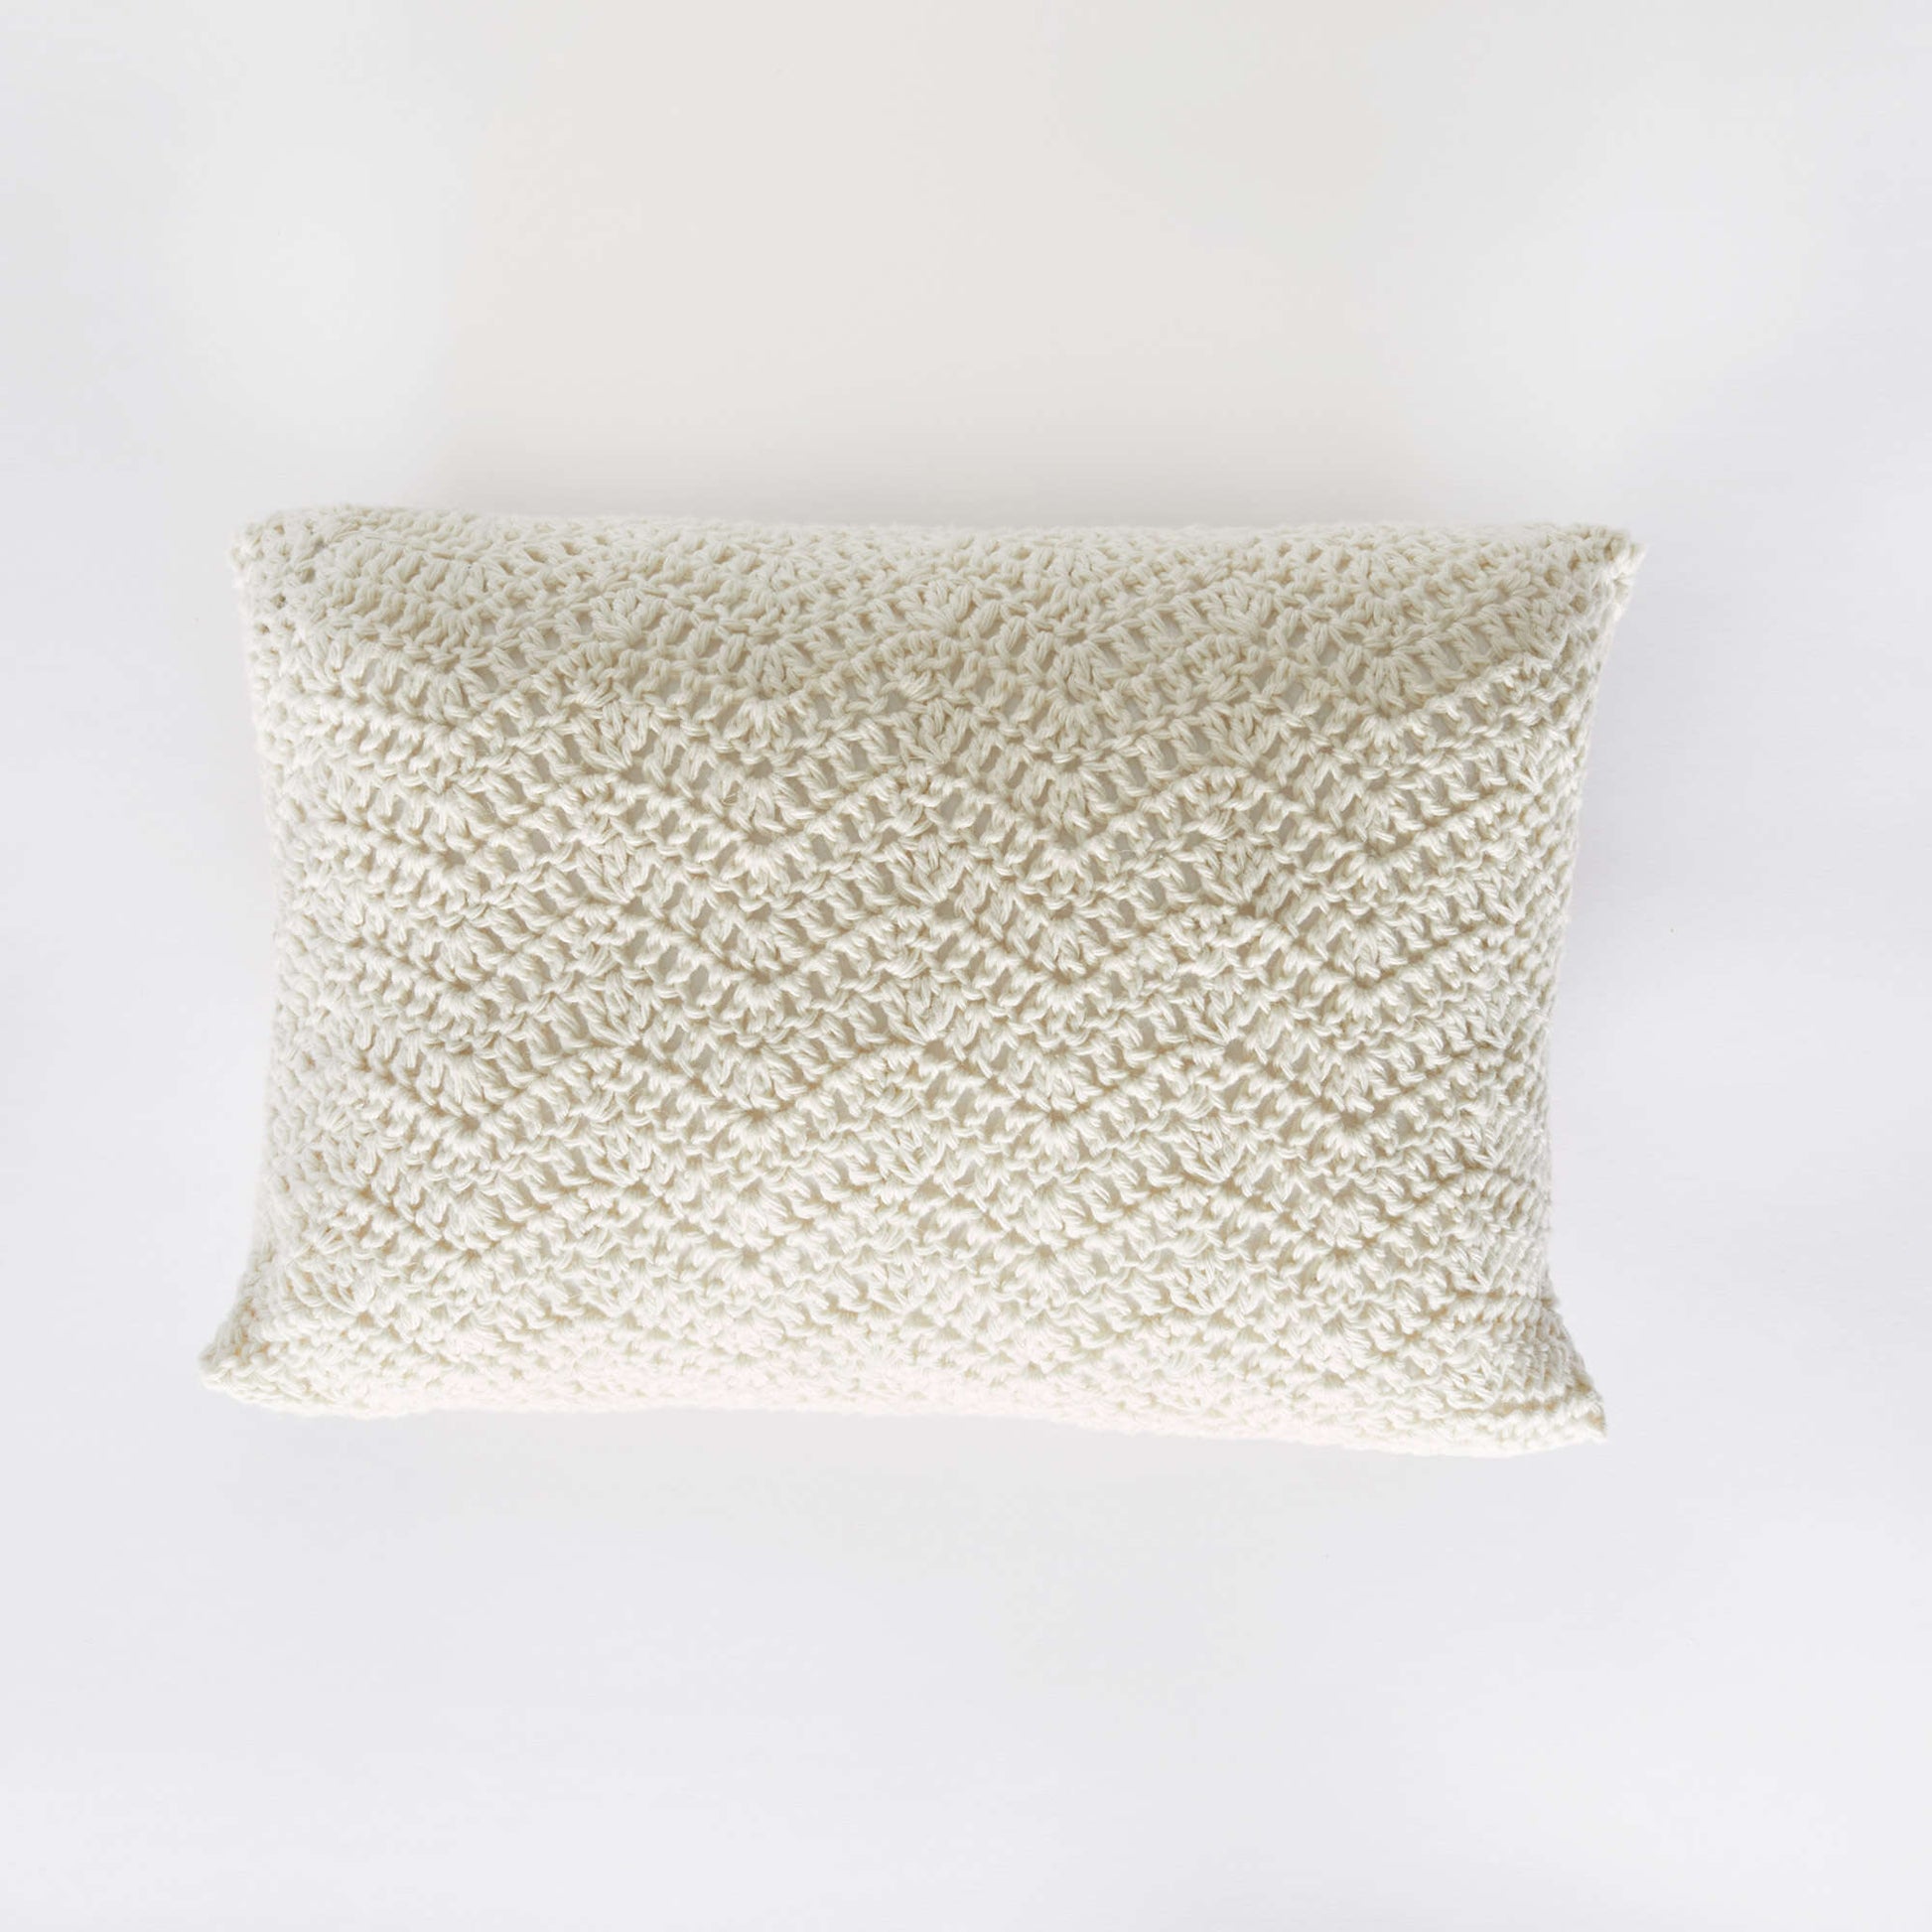 Free Red Heart Scallop Shell Crochet Pillow Pattern